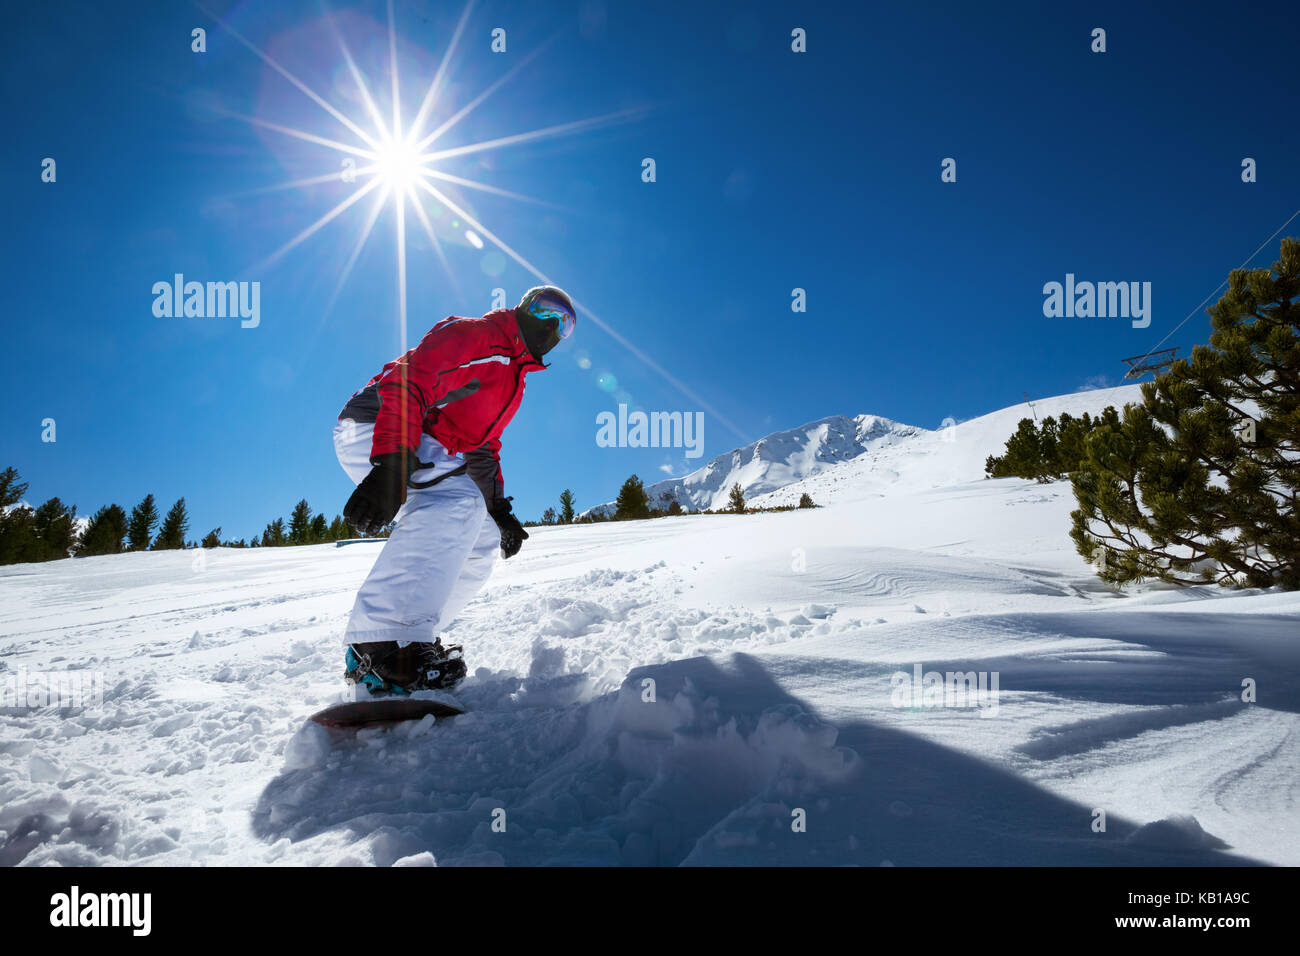 Snowboarder slides down snowy ski slope on snowboard. Stock Photo